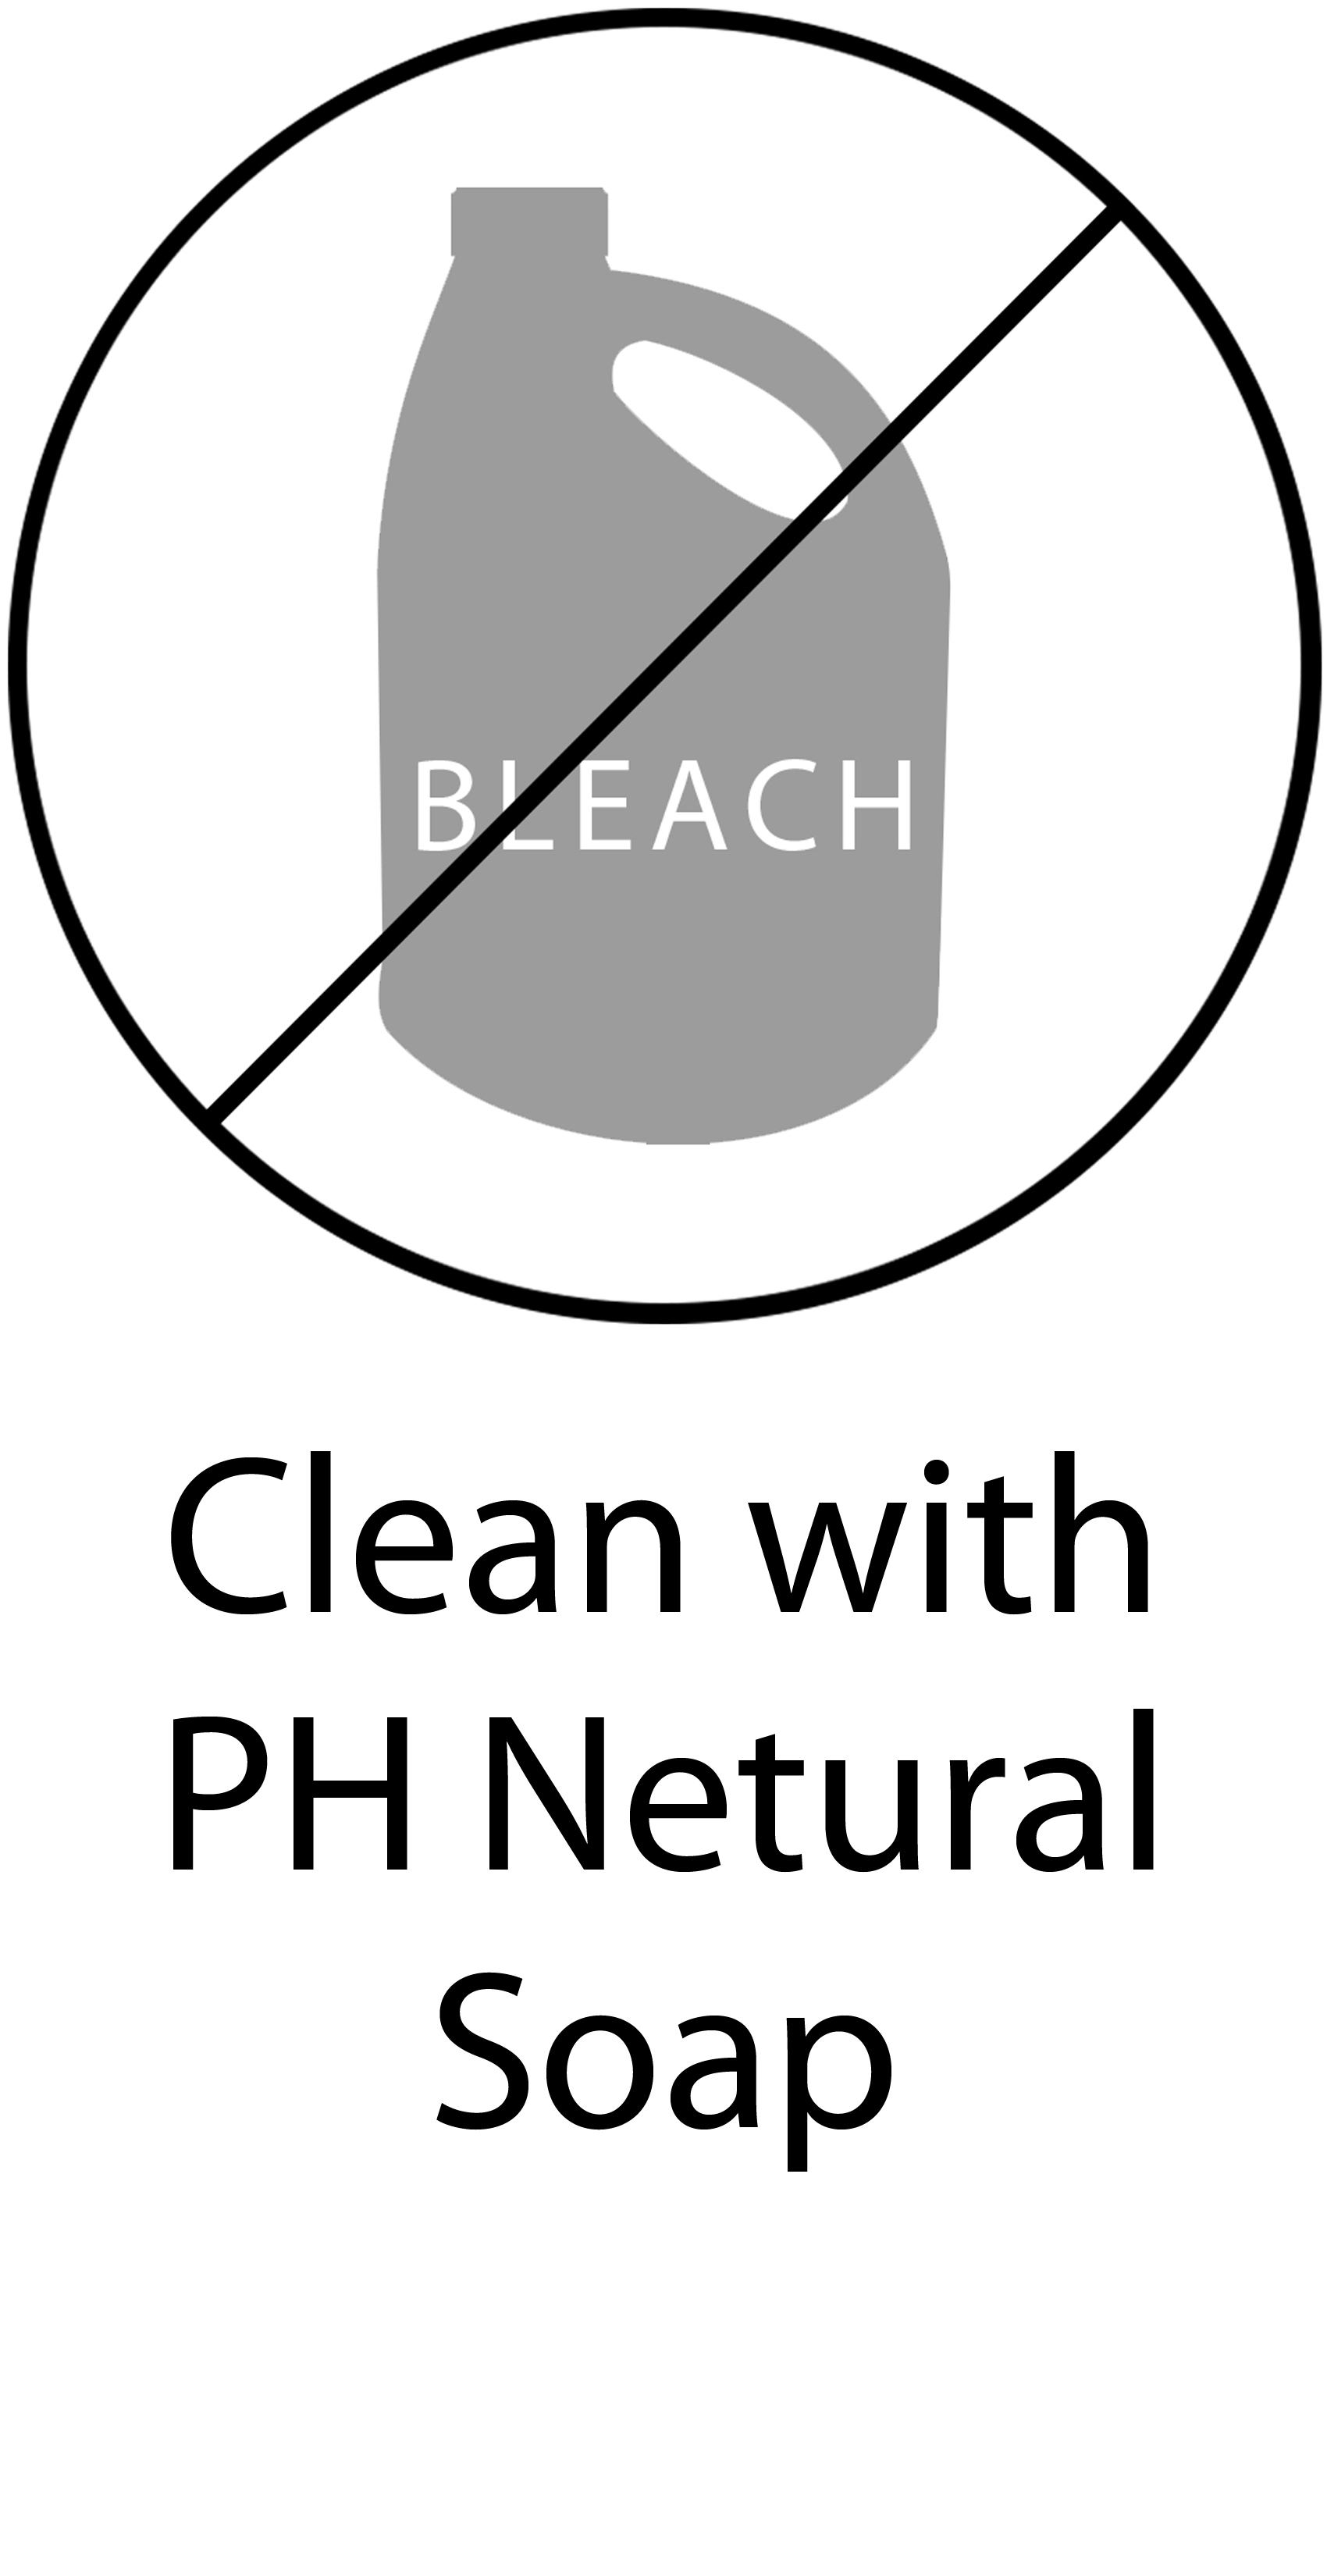 Clean with PH Neutral Soap.jpg